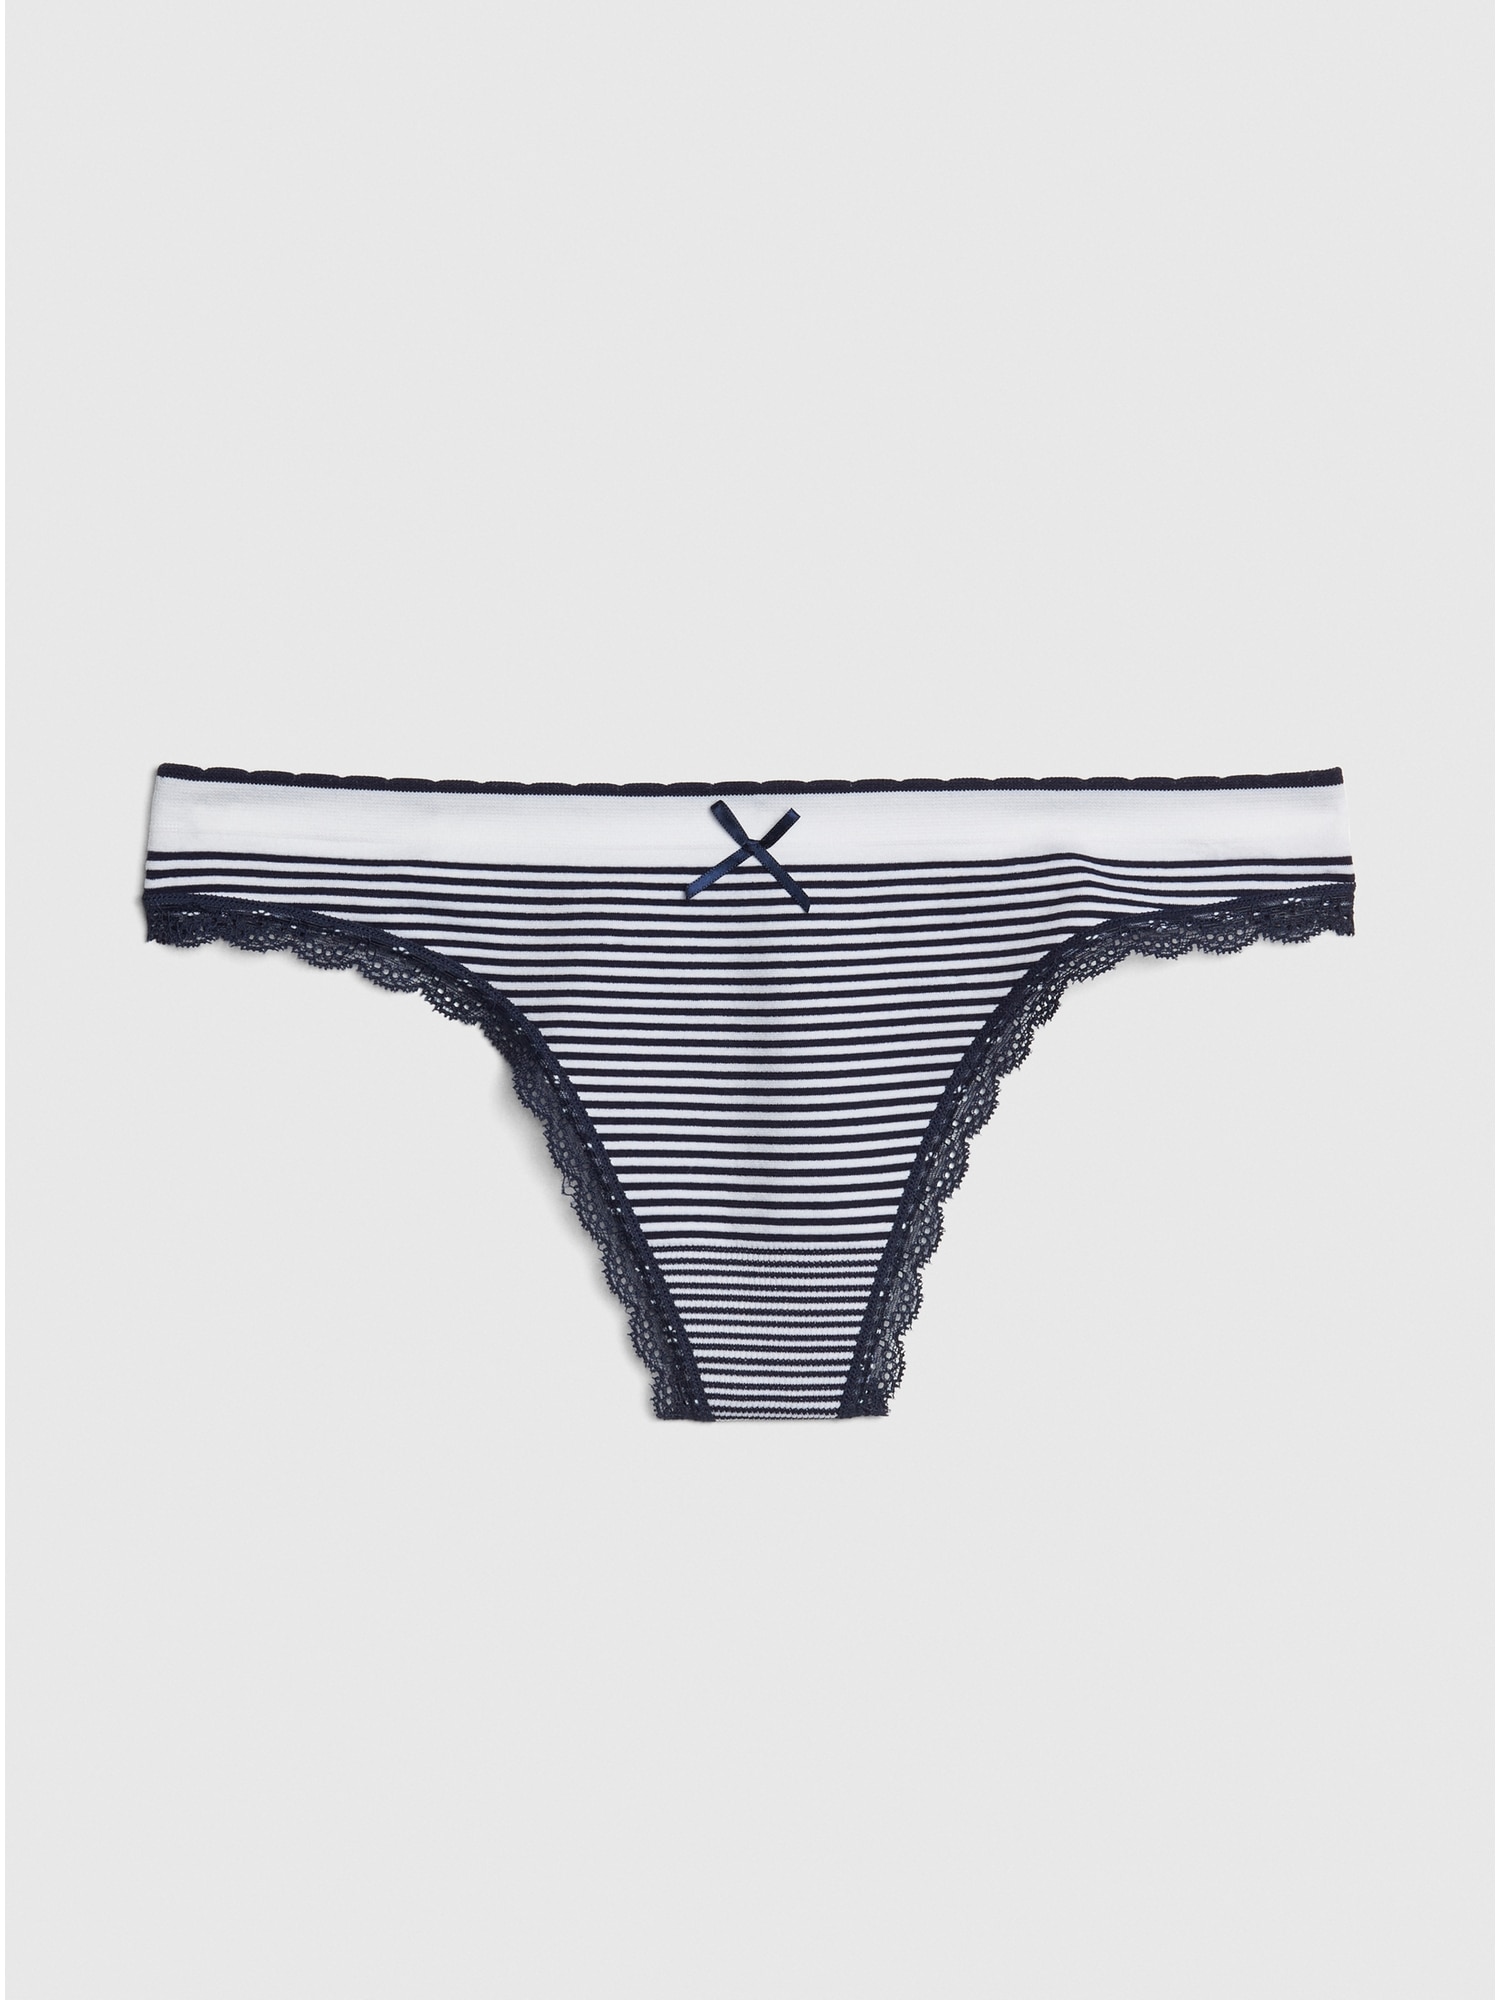 Women's Striped Panties, Seamless & Knit Panties